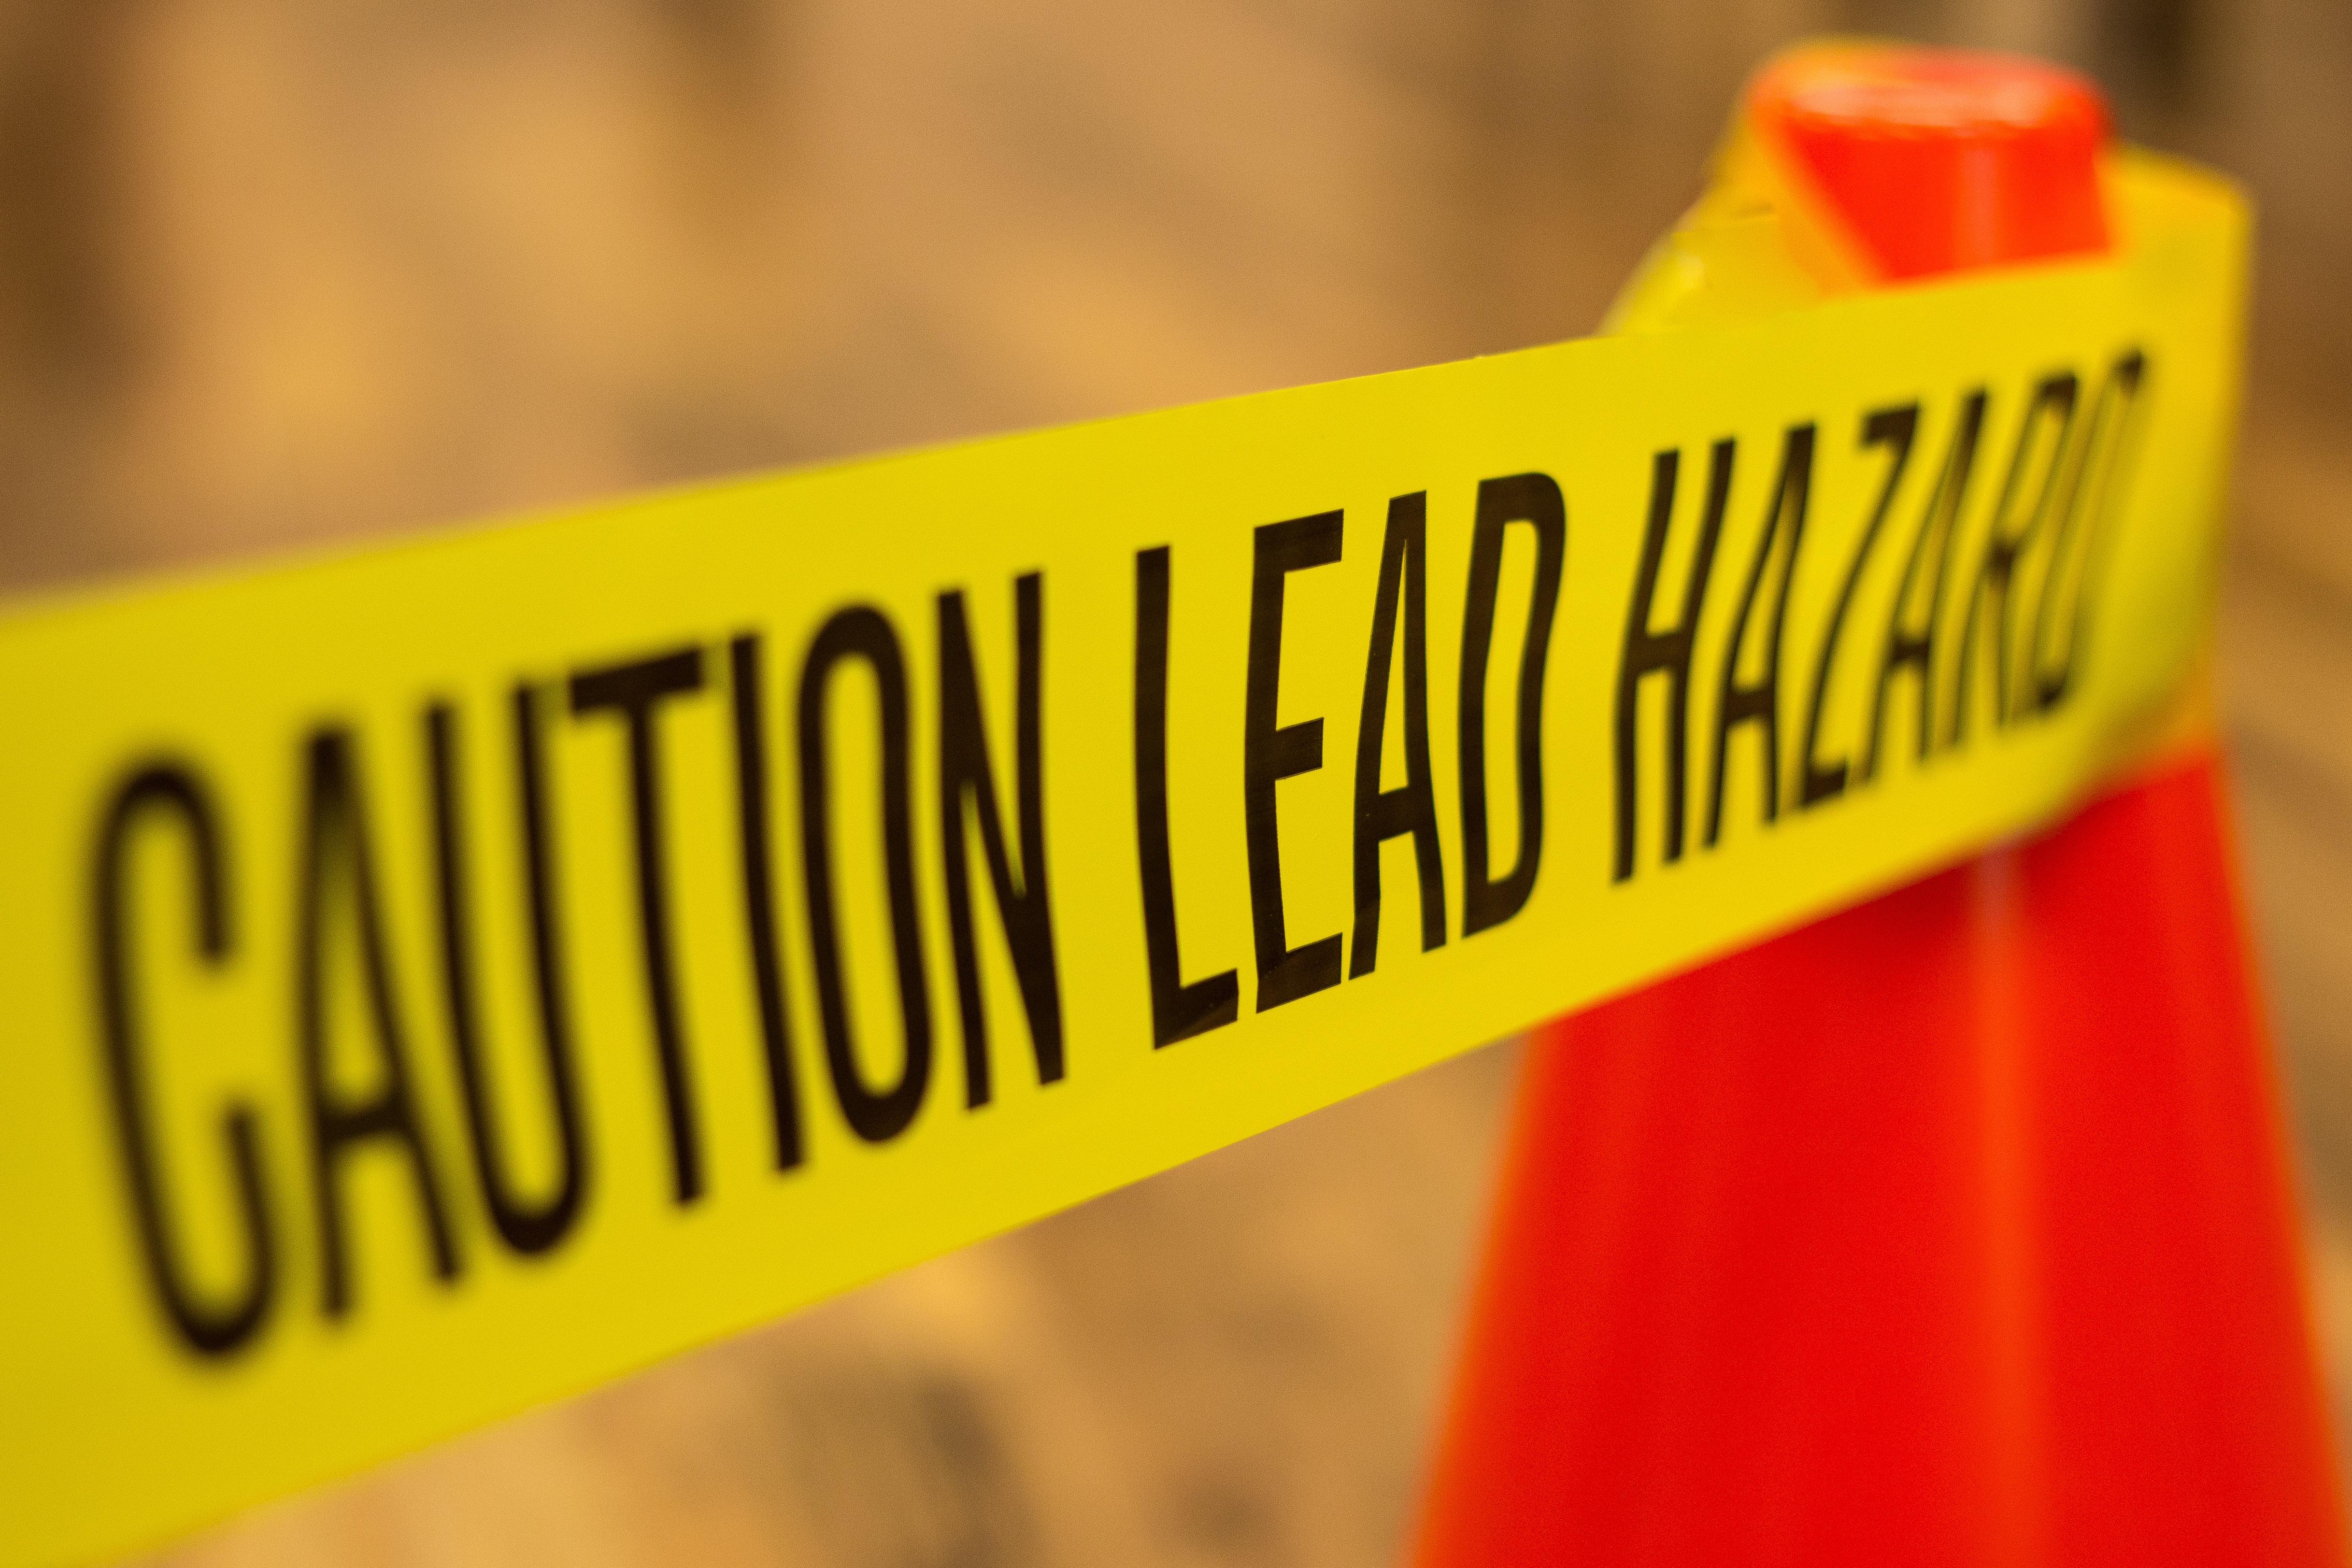 Caution tape reading lead hazard